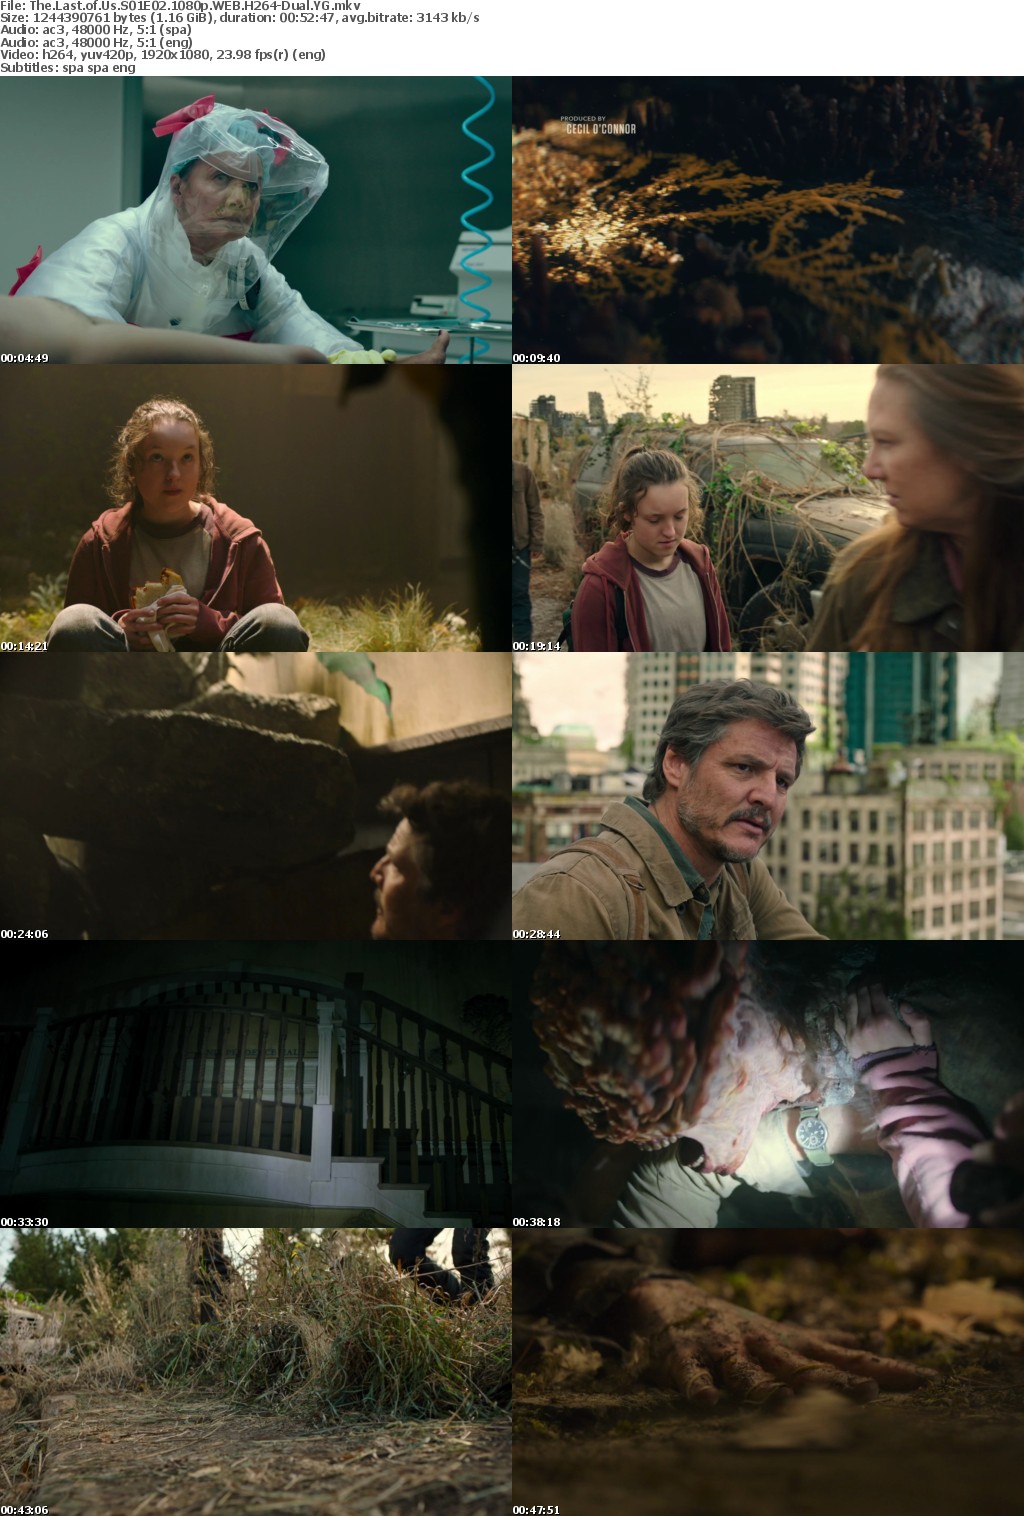 The Last of Us S01E02 1080p WEB H264-Dual YG